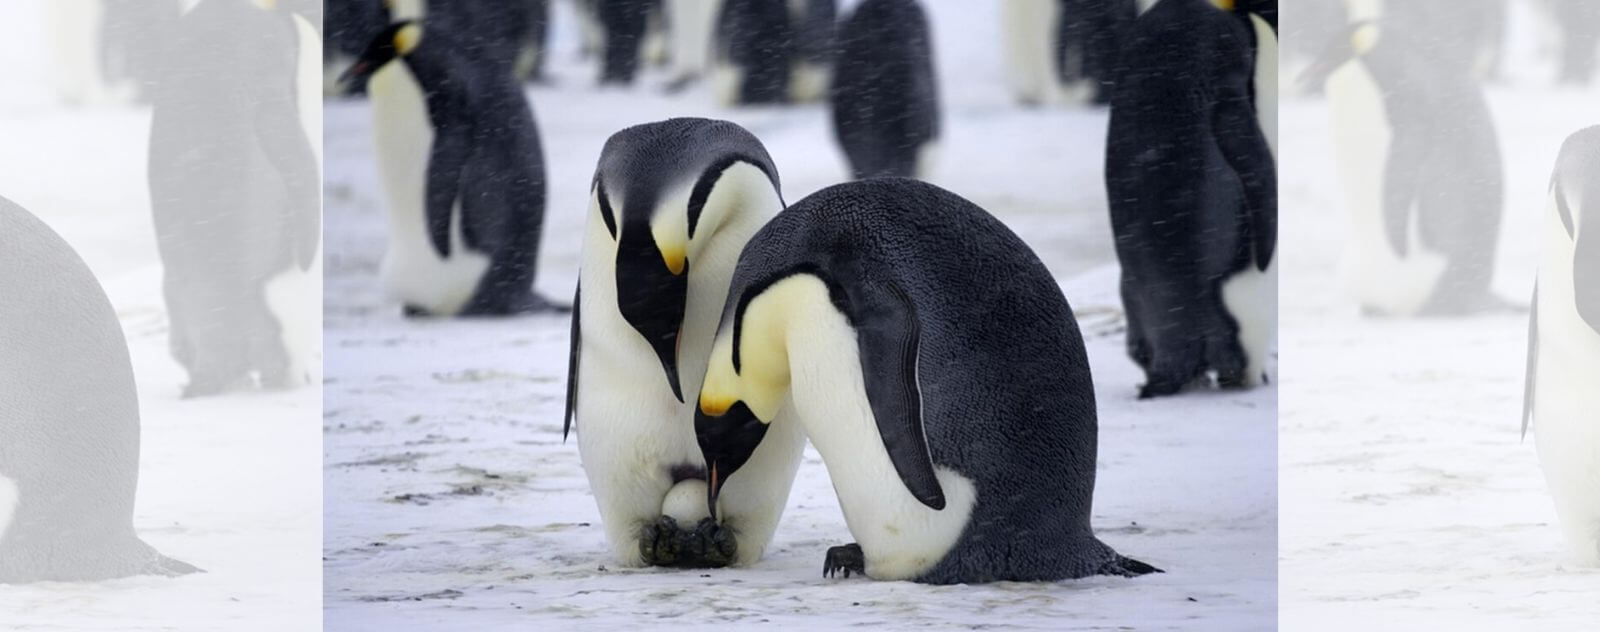 Penguin hatching its egg